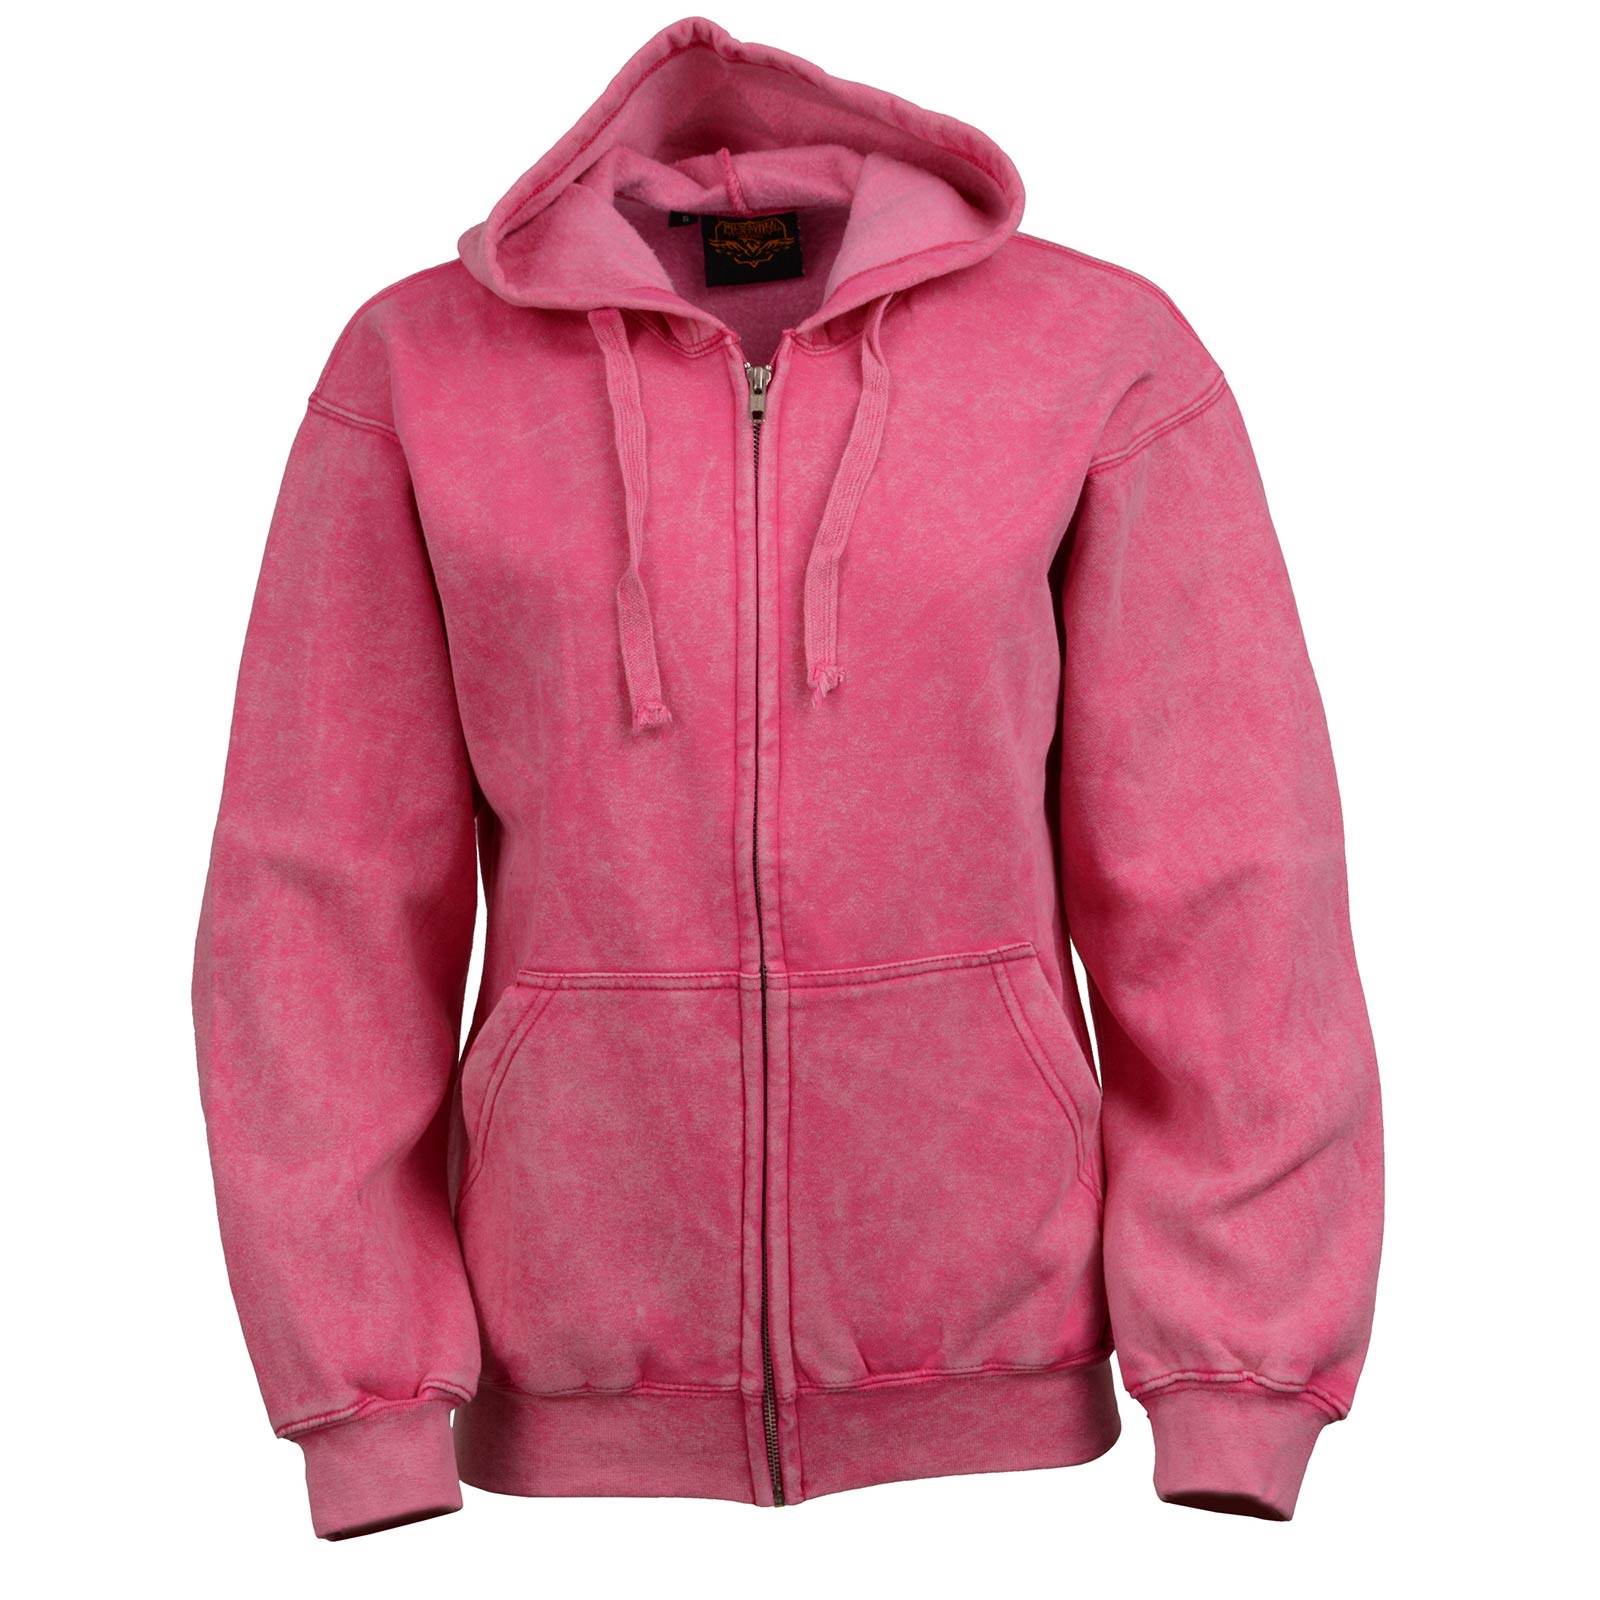 Milwaukee Leather MNG21620 Women's Distressed Pink Sweatshirt Full Zip Up Long Sleeve Casual Hoodie - with Pocket